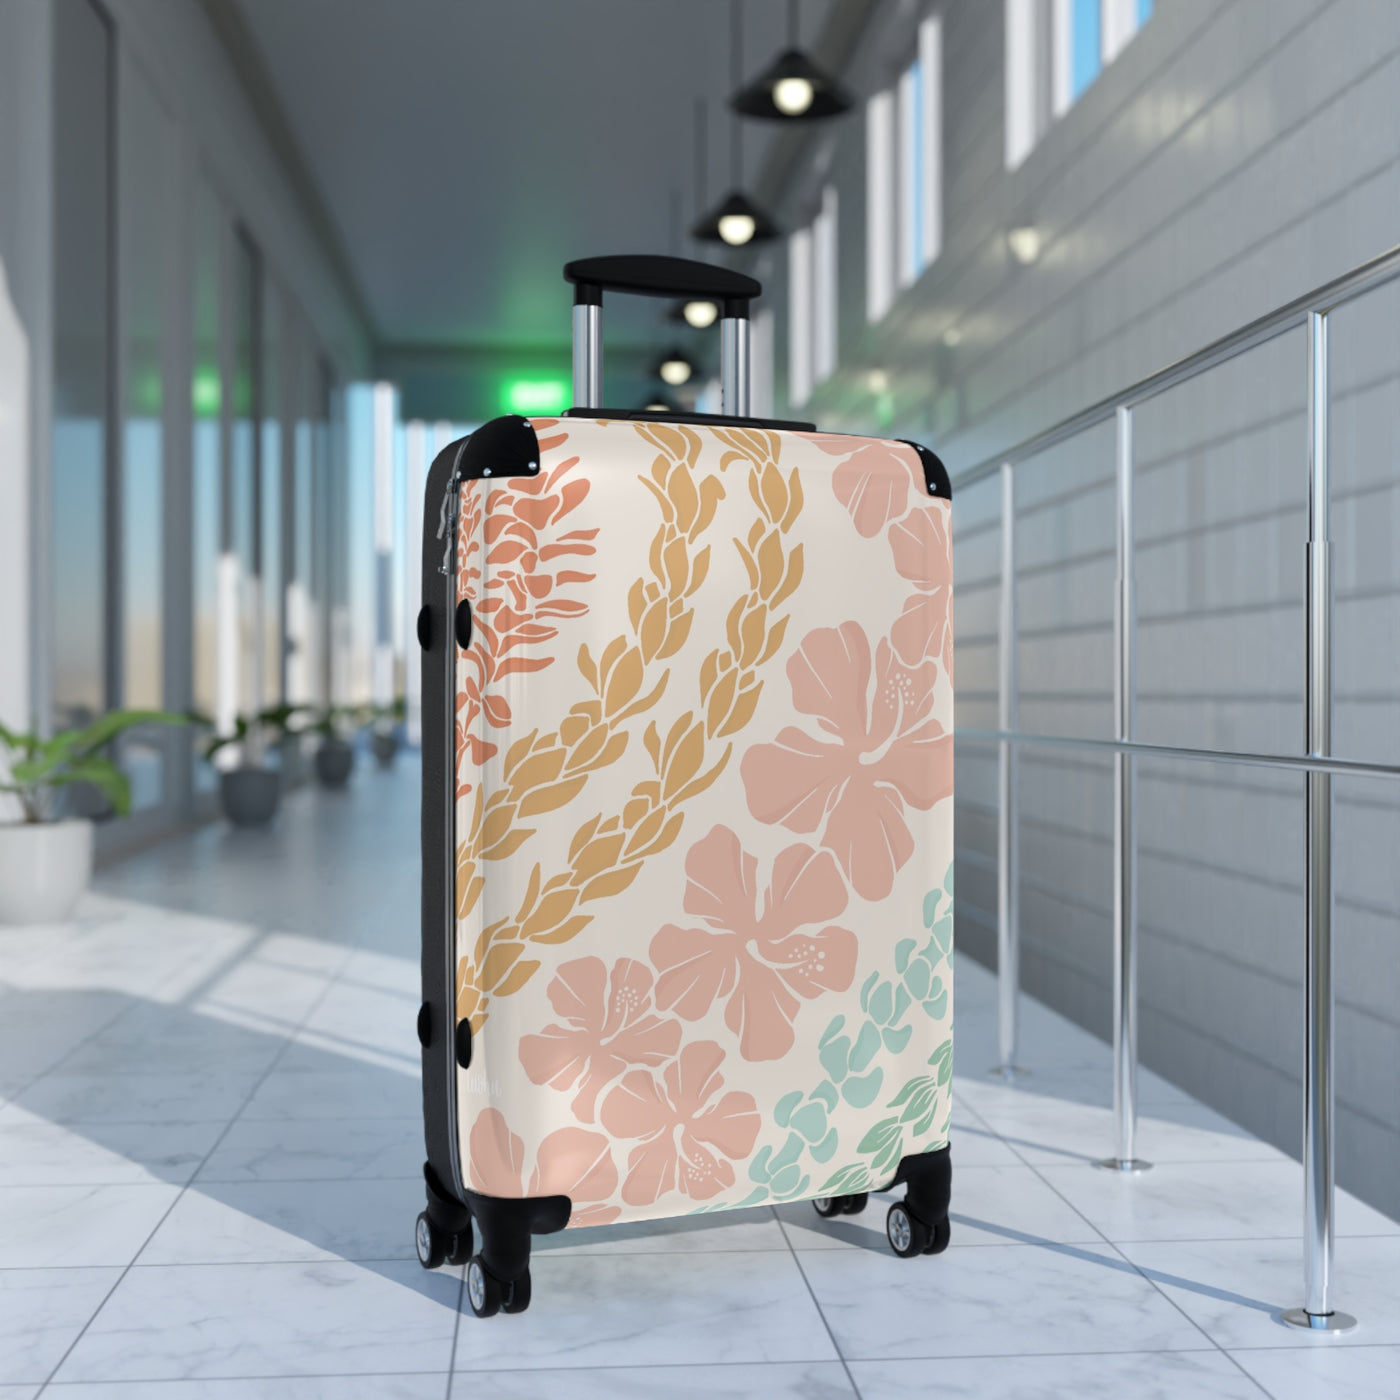 Groovy Lei - Cabin Suitcase